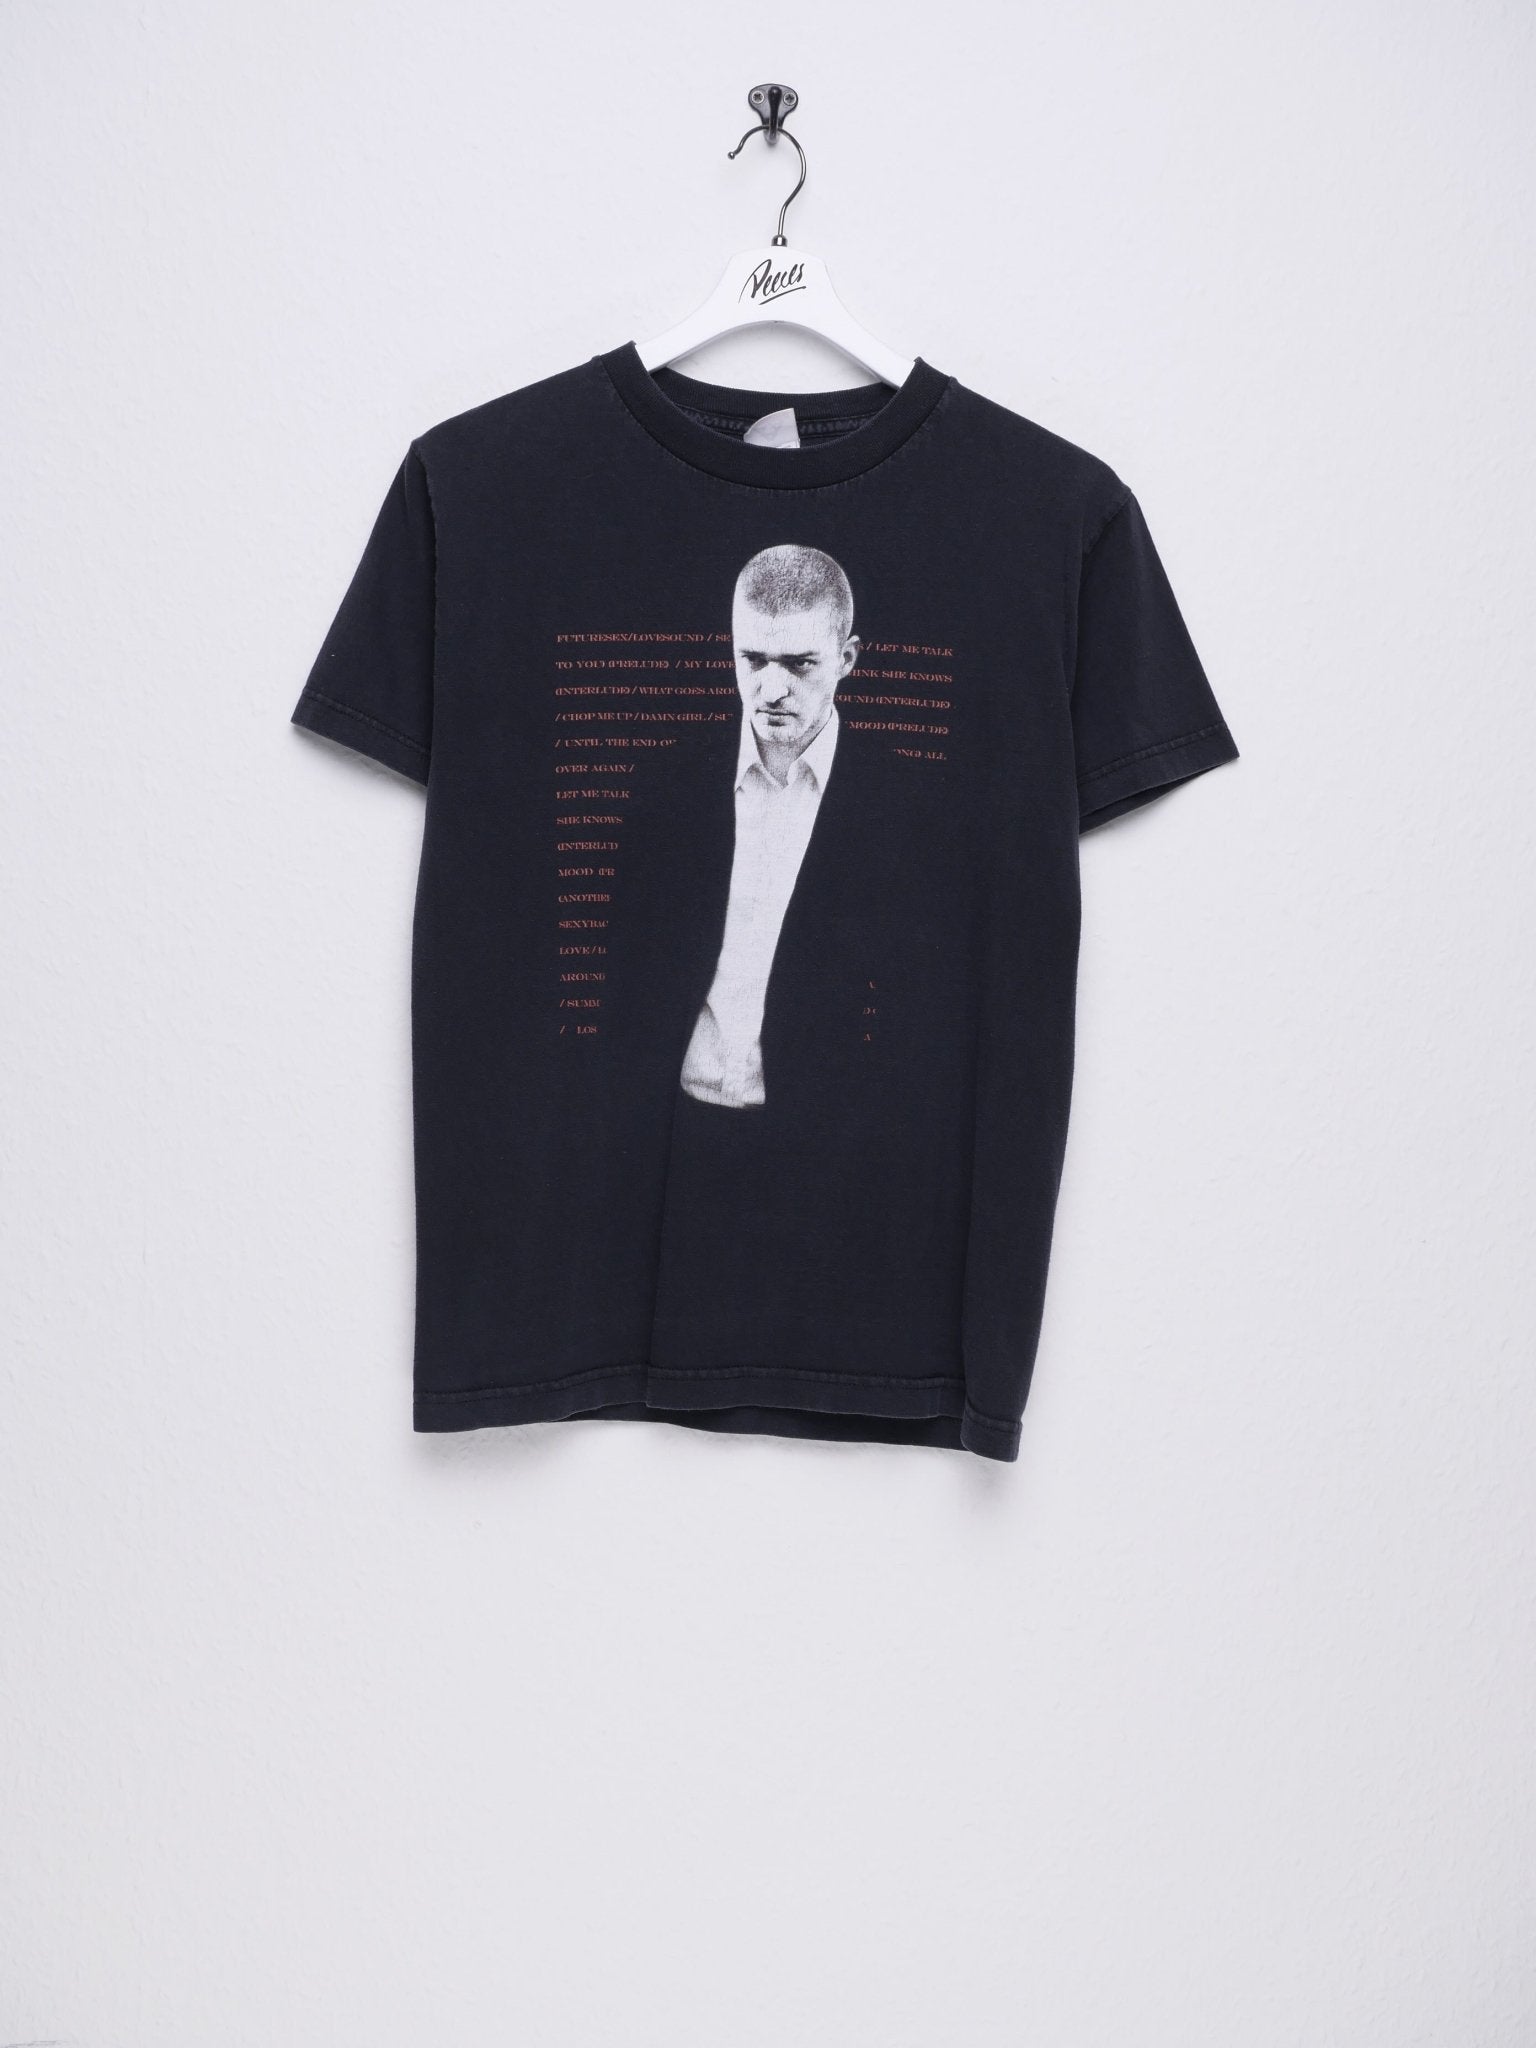 Justin Timberlake printed Graphic Shirt - Peeces